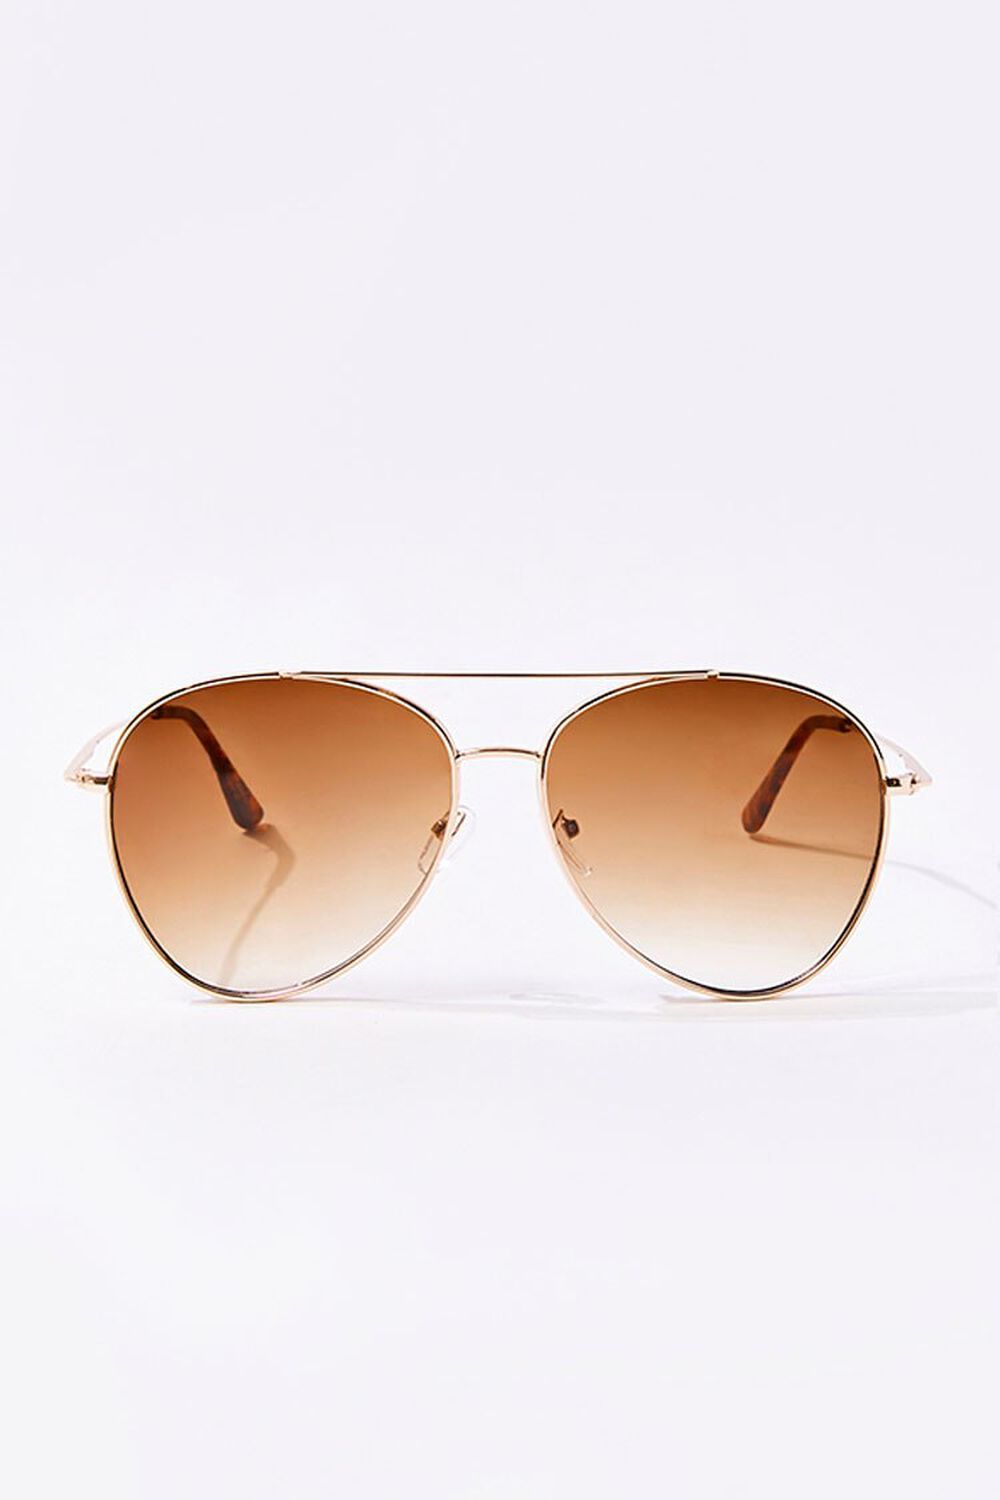 GOLD Men Tinted Aviator Sunglasses, image 1